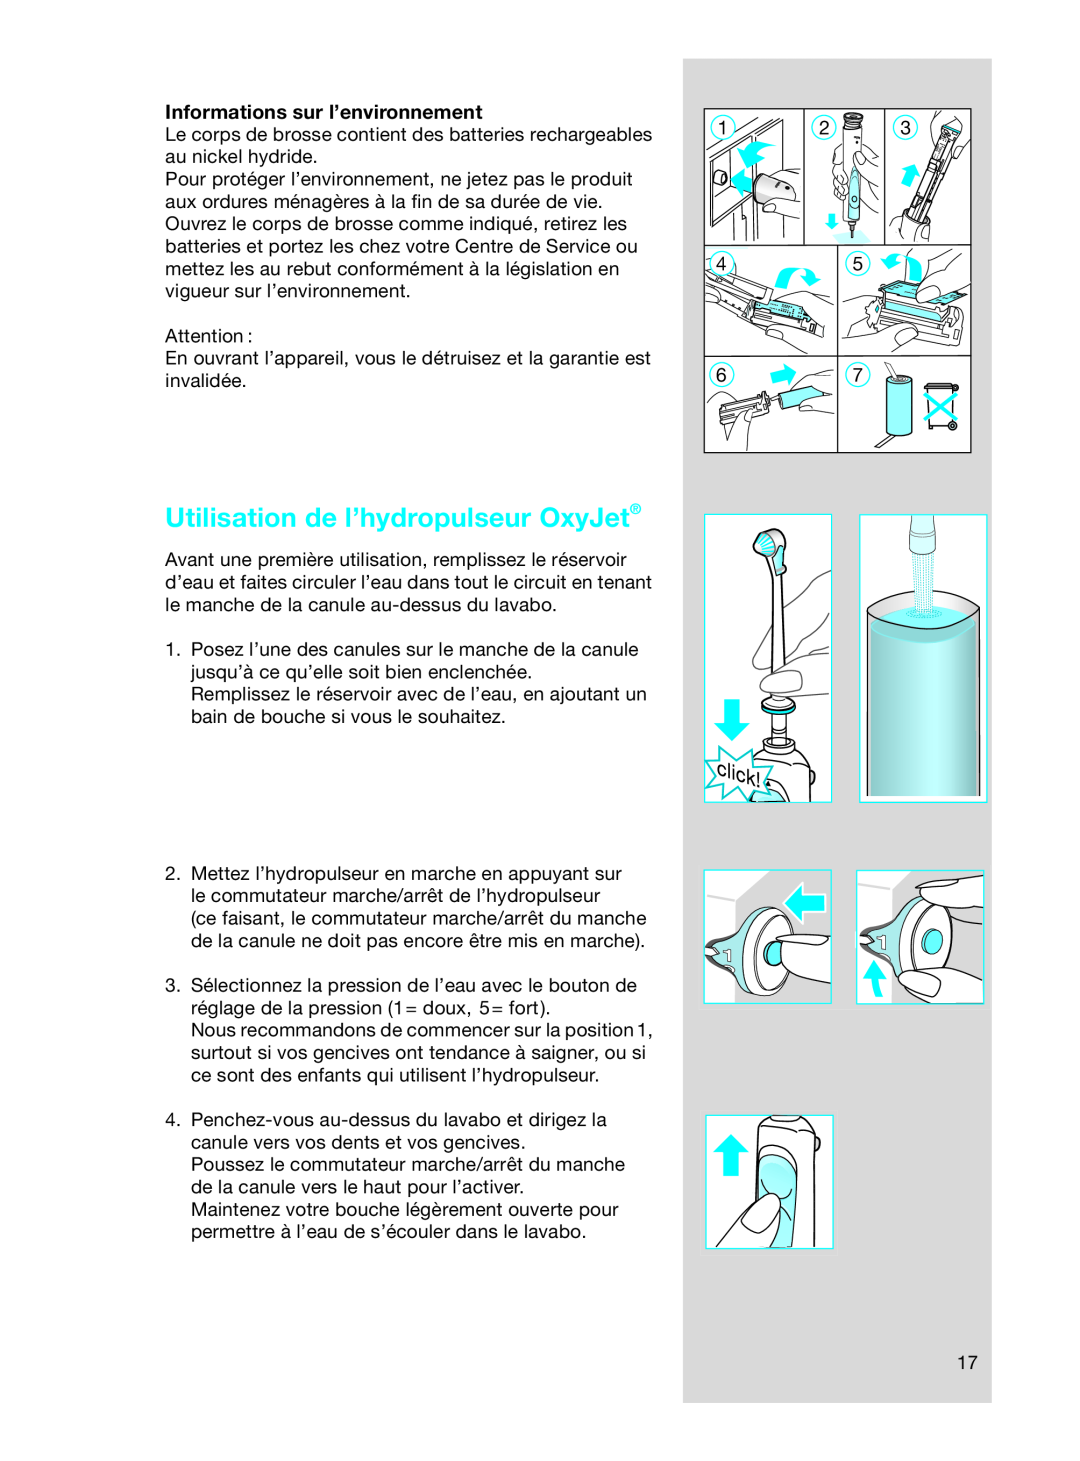 Braun OC17525, OC 17545X manual Utilisation de l’hydropulseur OxyJet, Informations sur l’environnement 